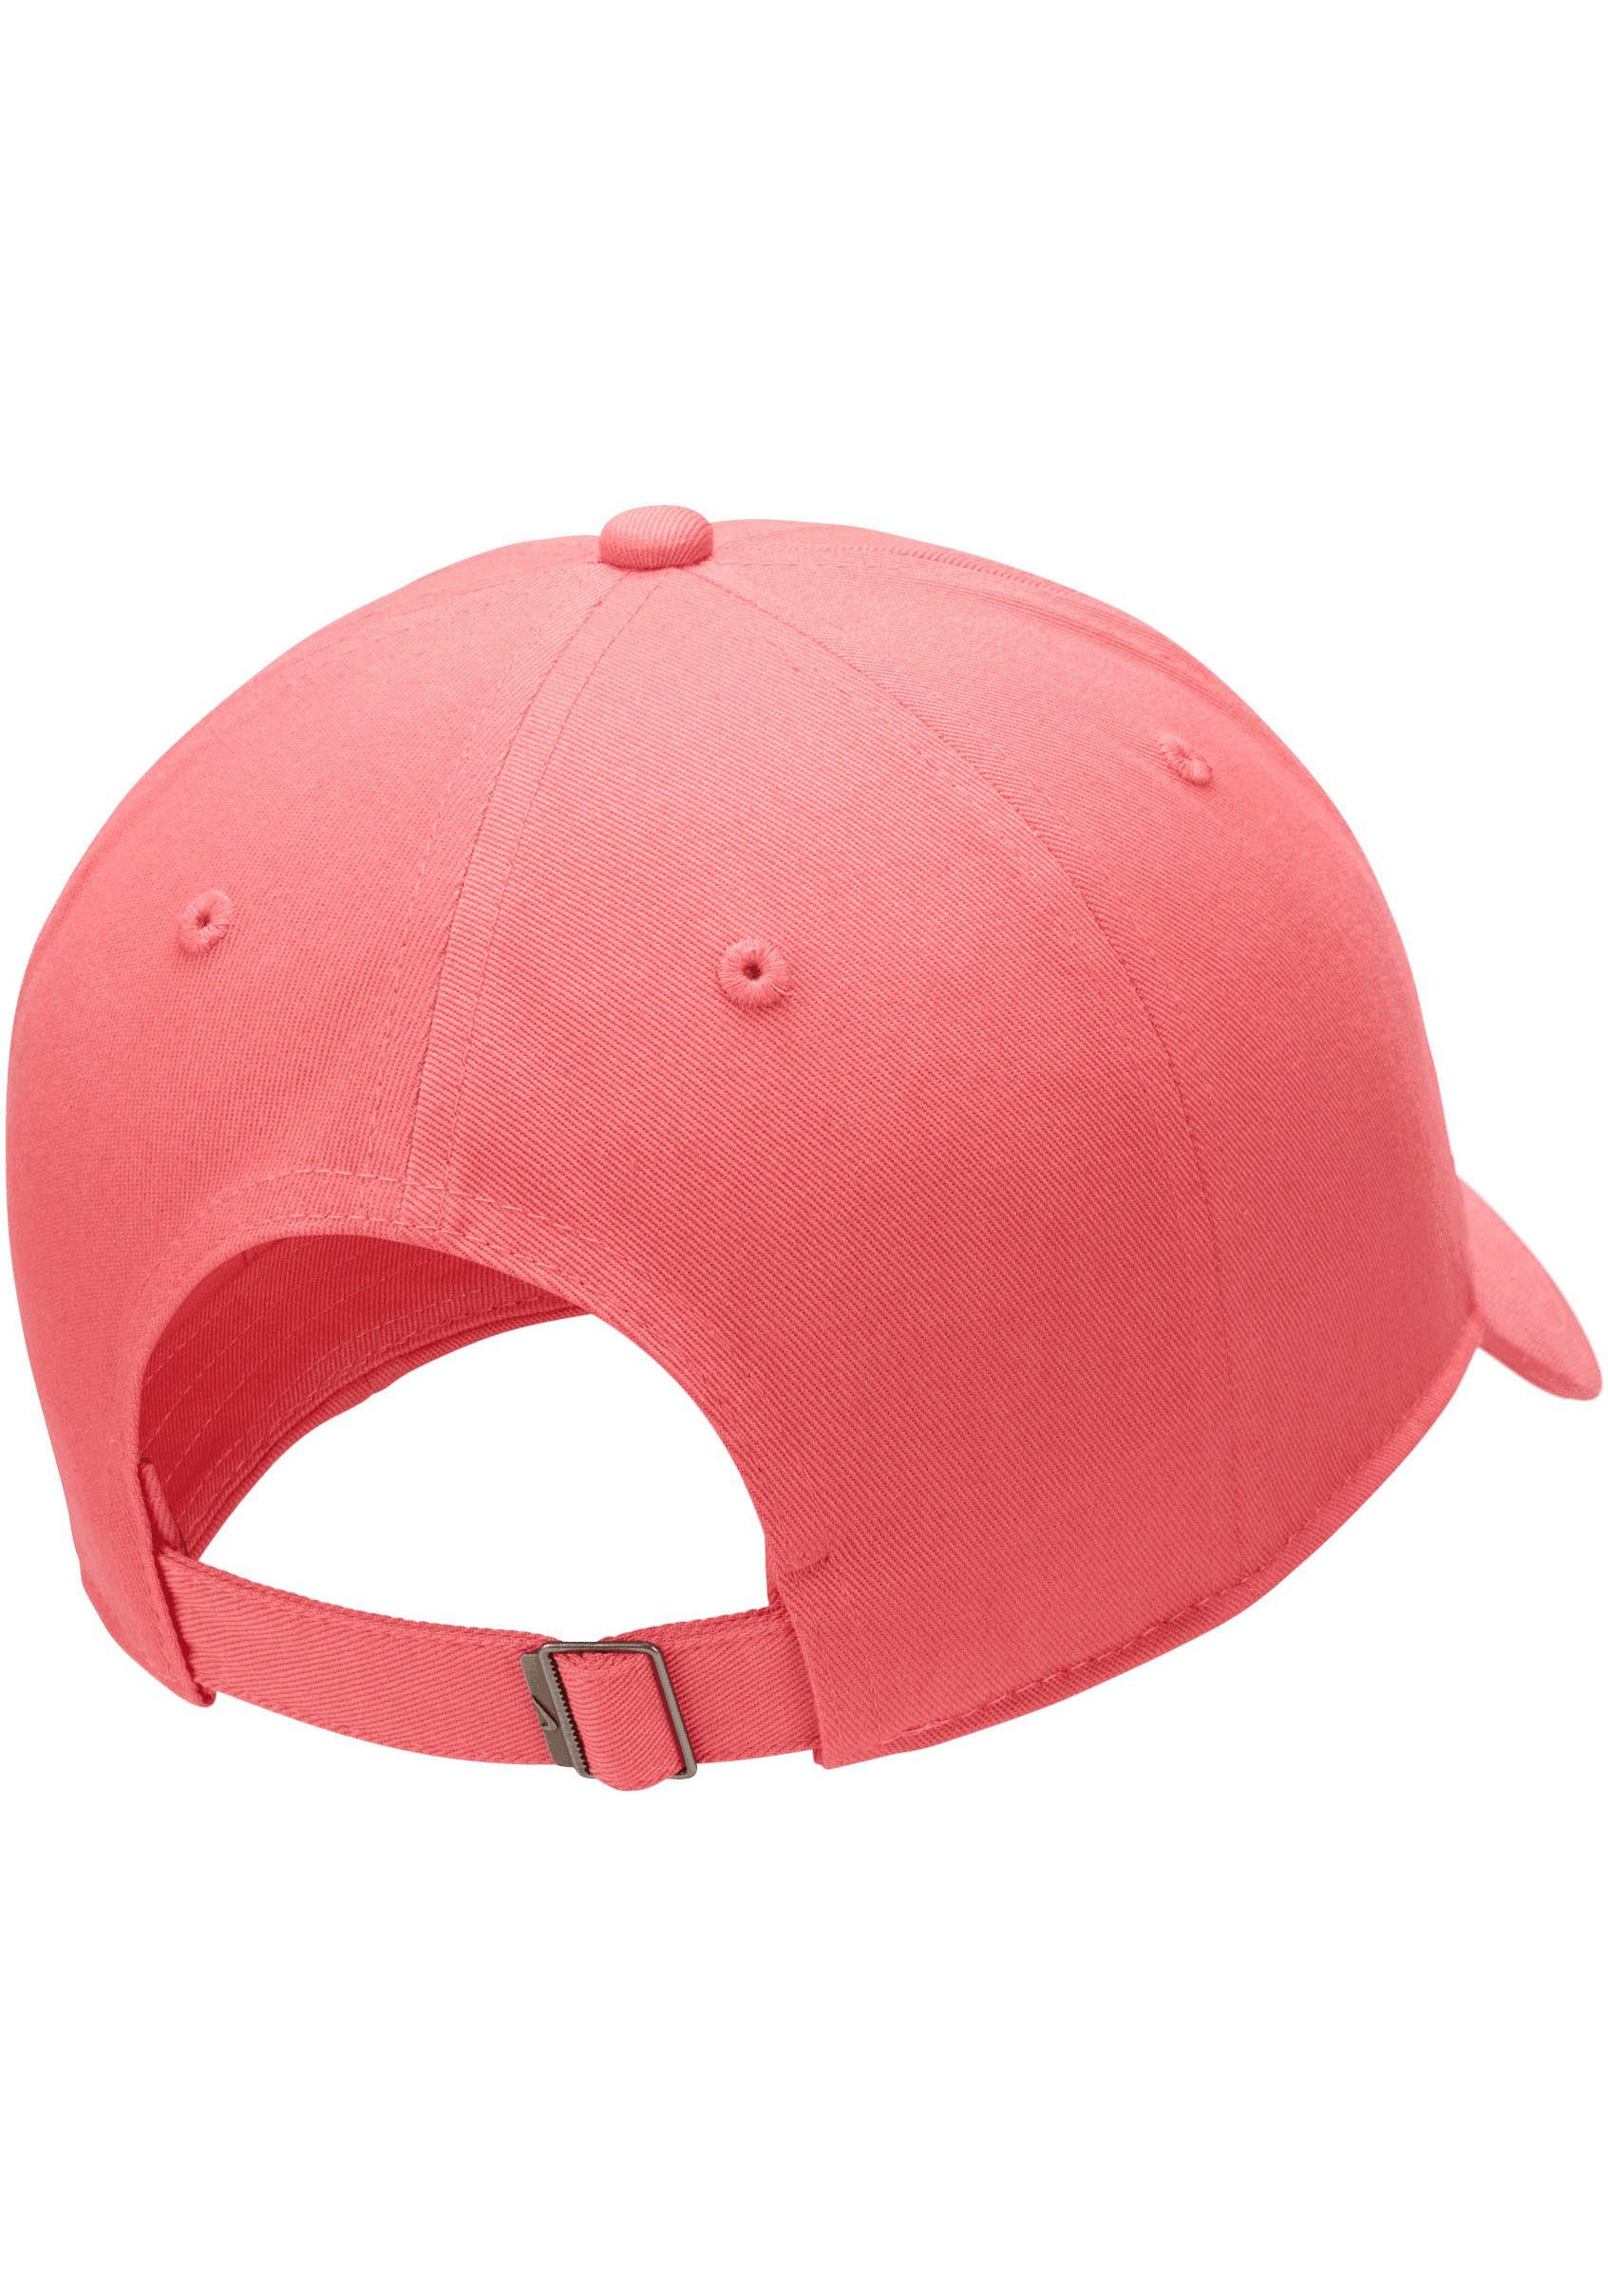 Nike Sportswear Baseball Cap Heritage orange Hat Washed Futura